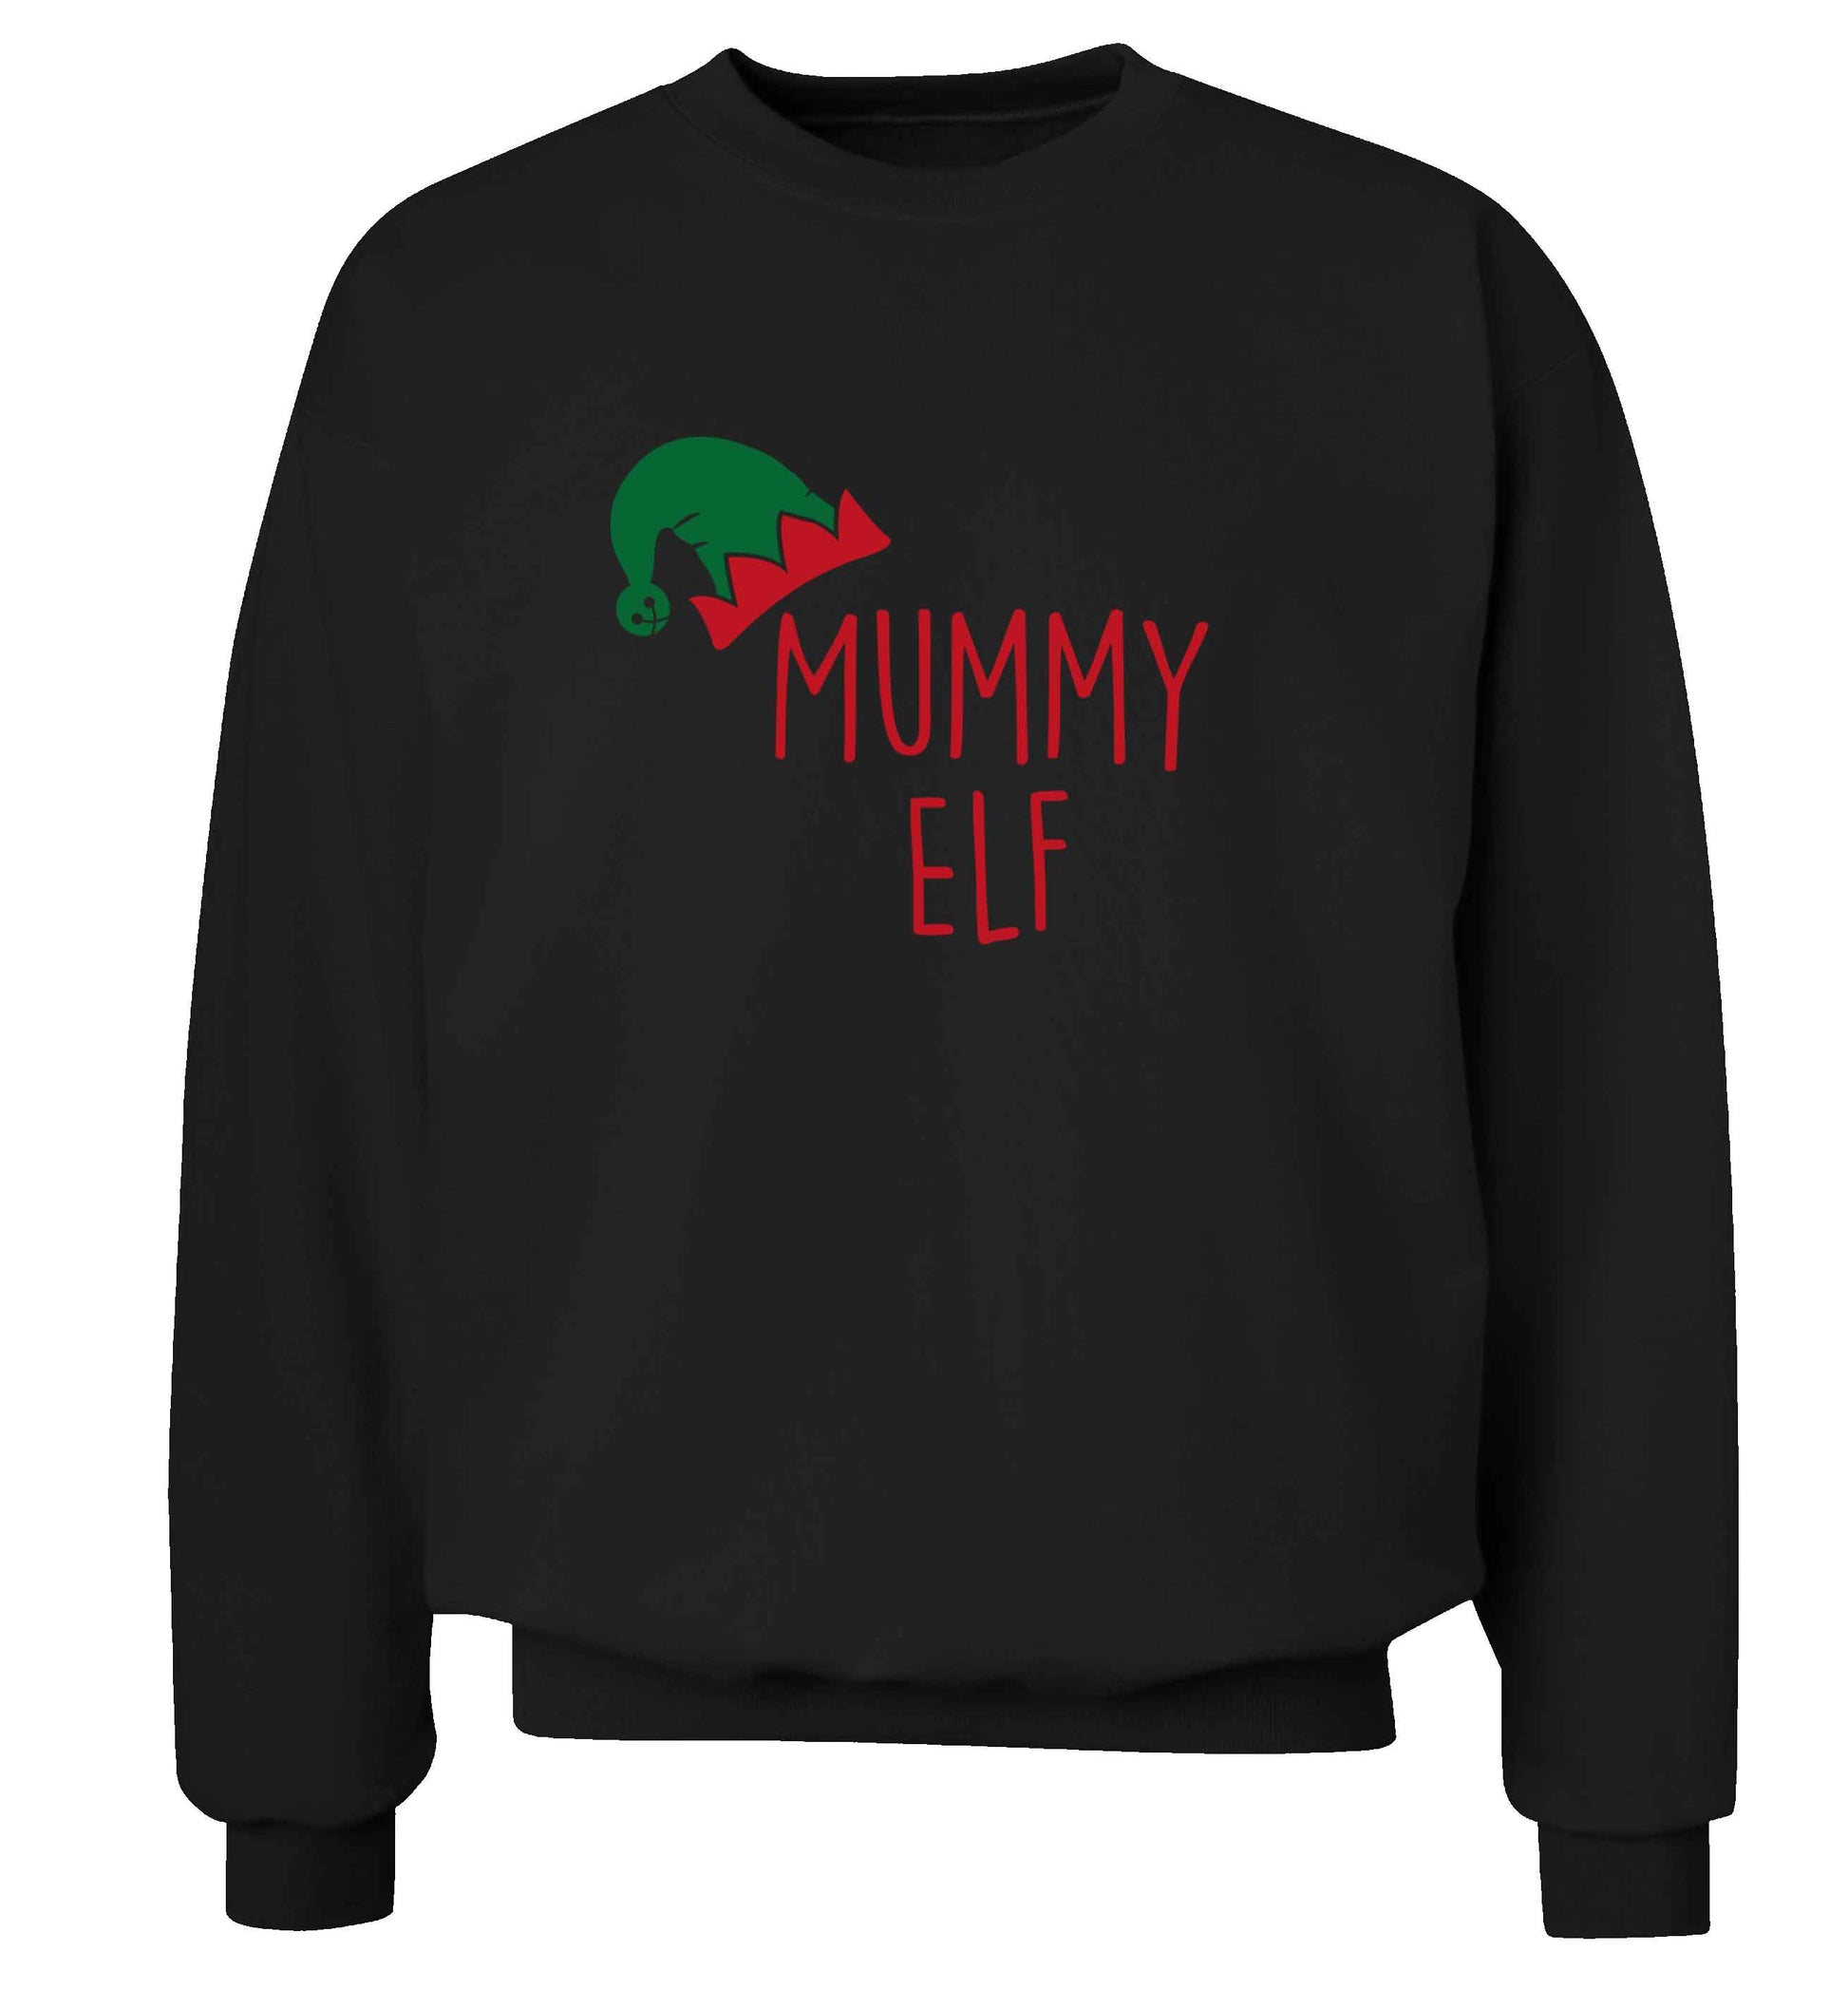 Mummy elf adult's unisex black sweater 2XL